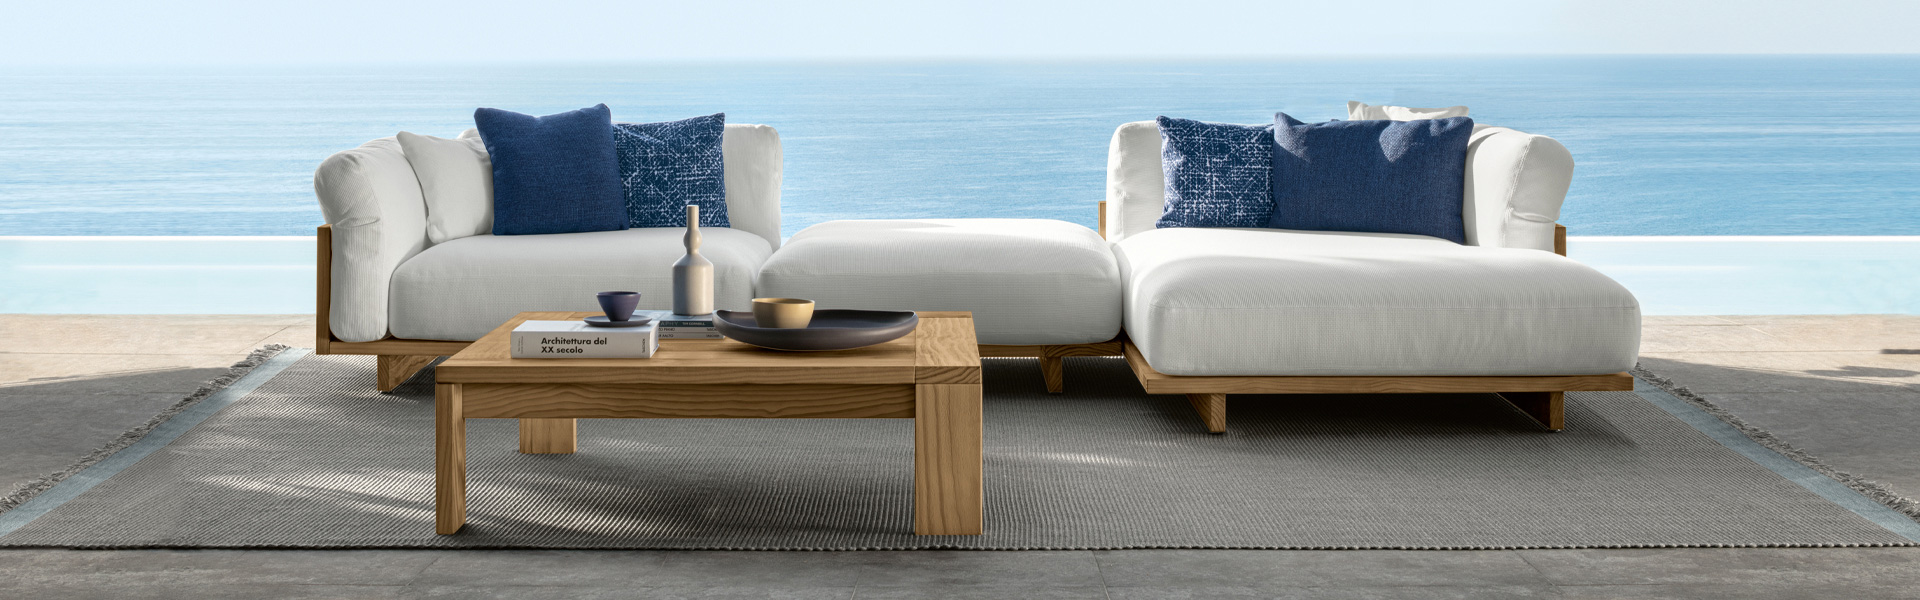 Beautiful garden furniture from Telenti with a stunning coastal backdrop